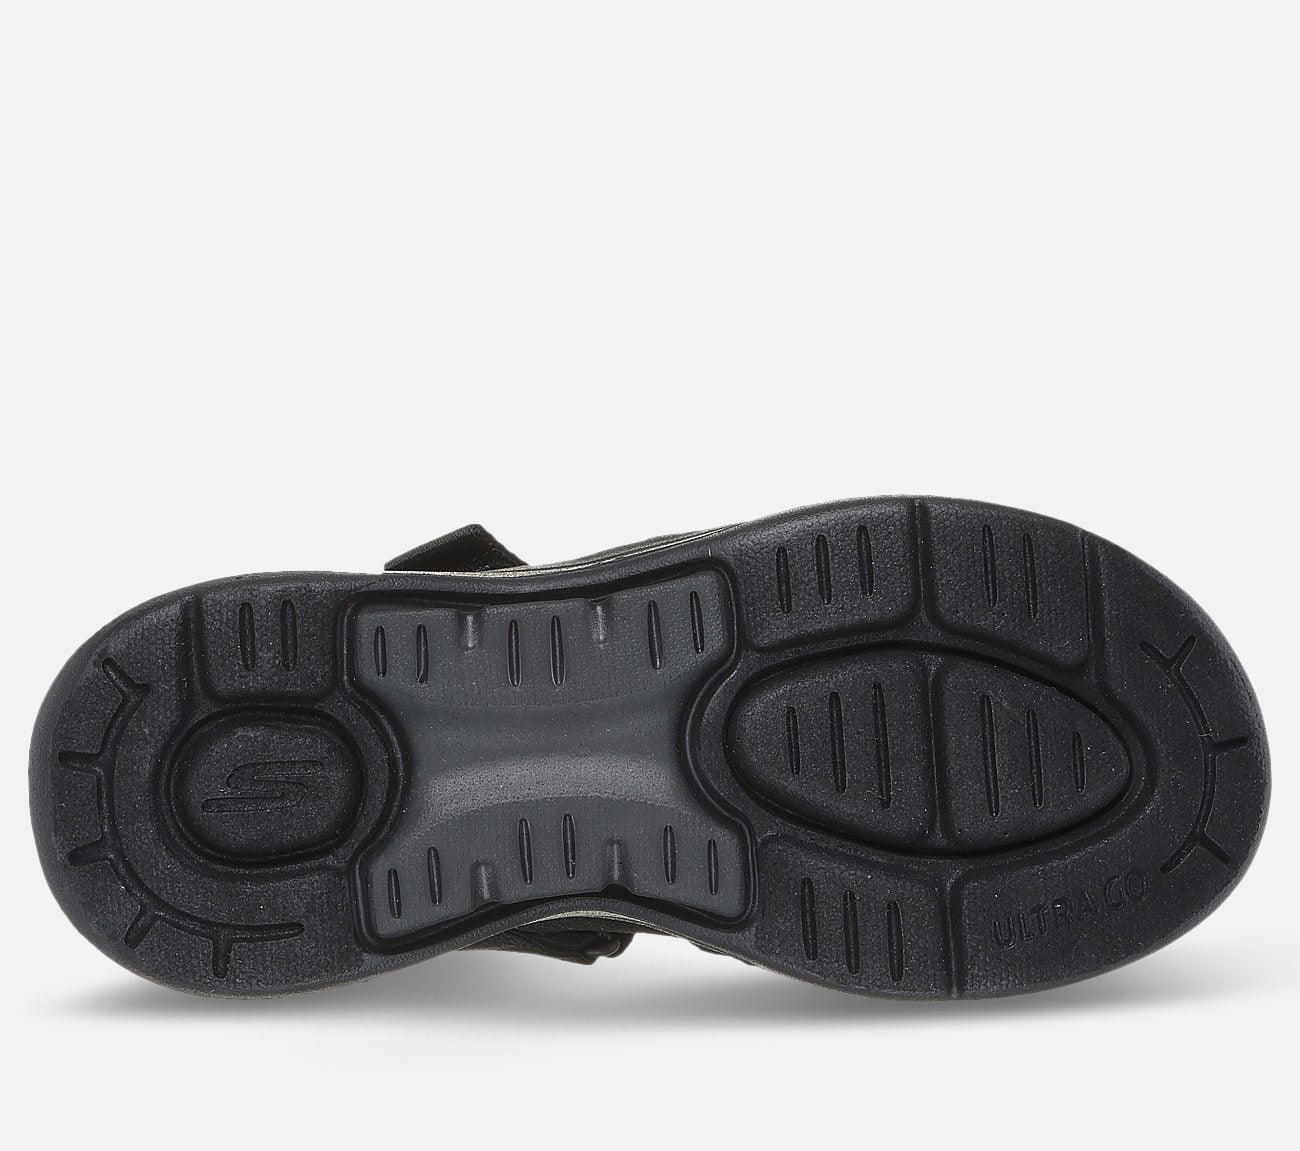 GO WALK Arch Fit Sandal  - Attract Sandal Skechers